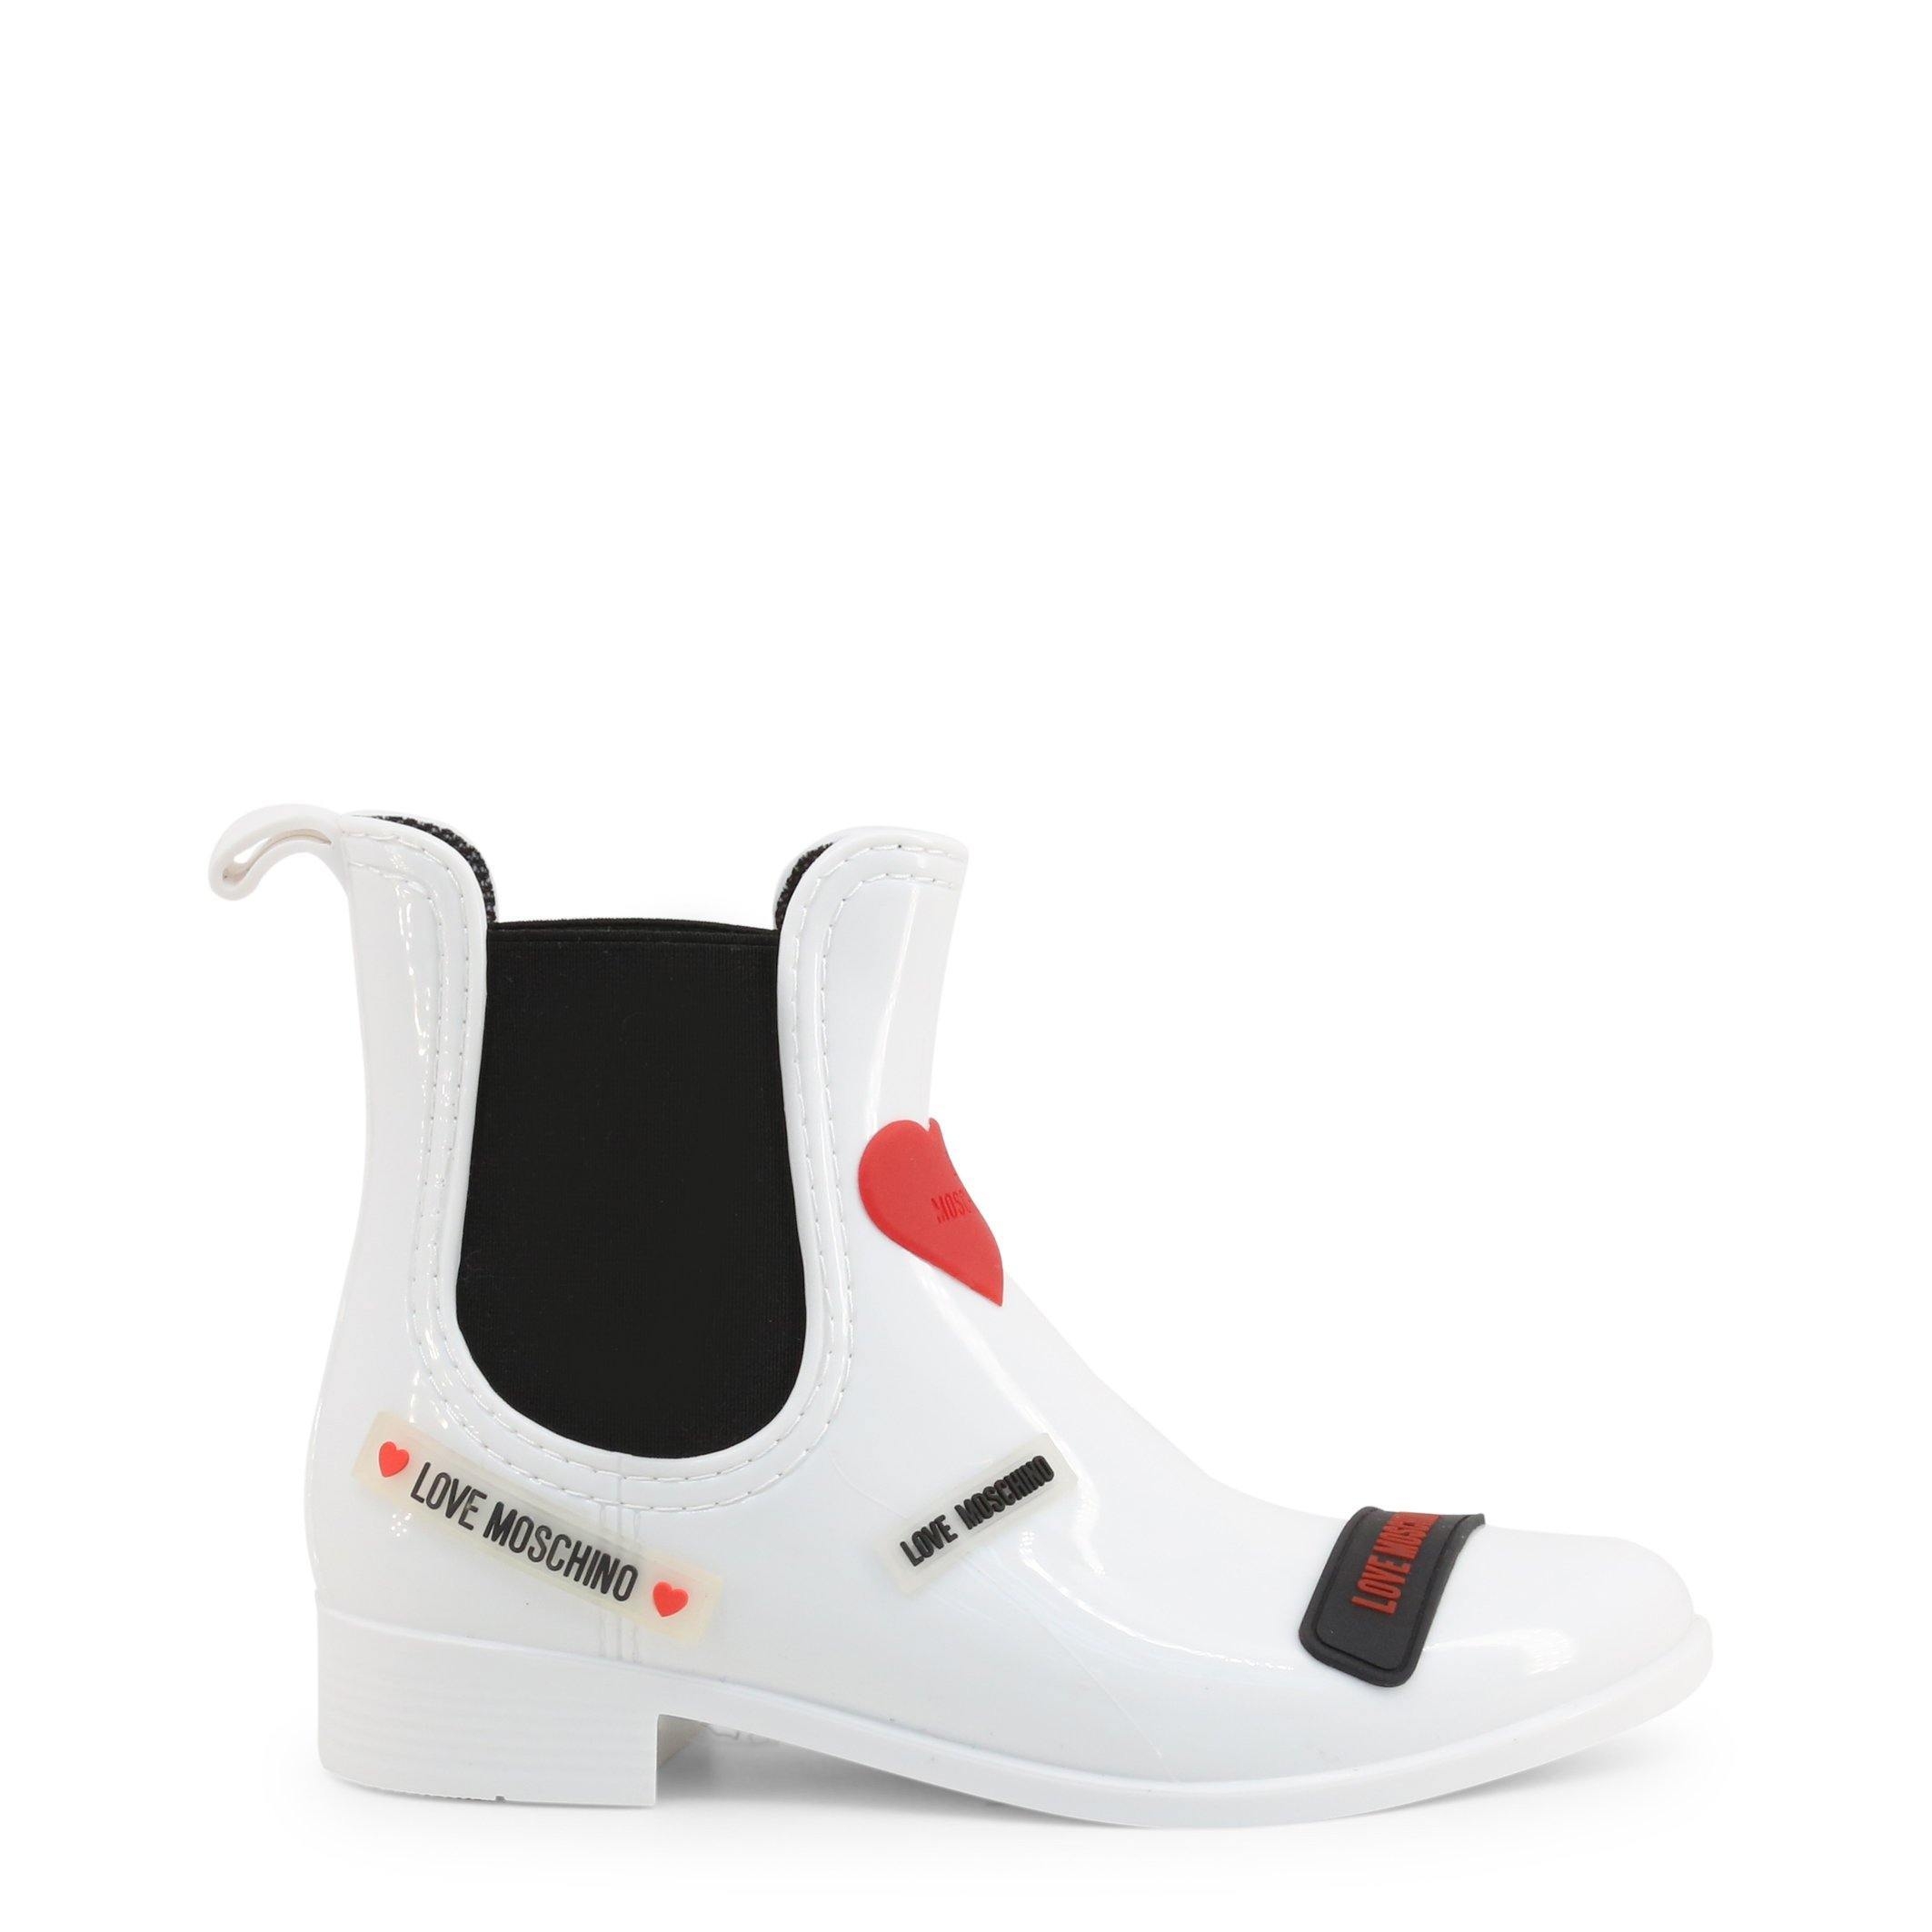 Love Moschino – Women’s ankle boots in white or black – JA21043G1BIR – white – EU 39